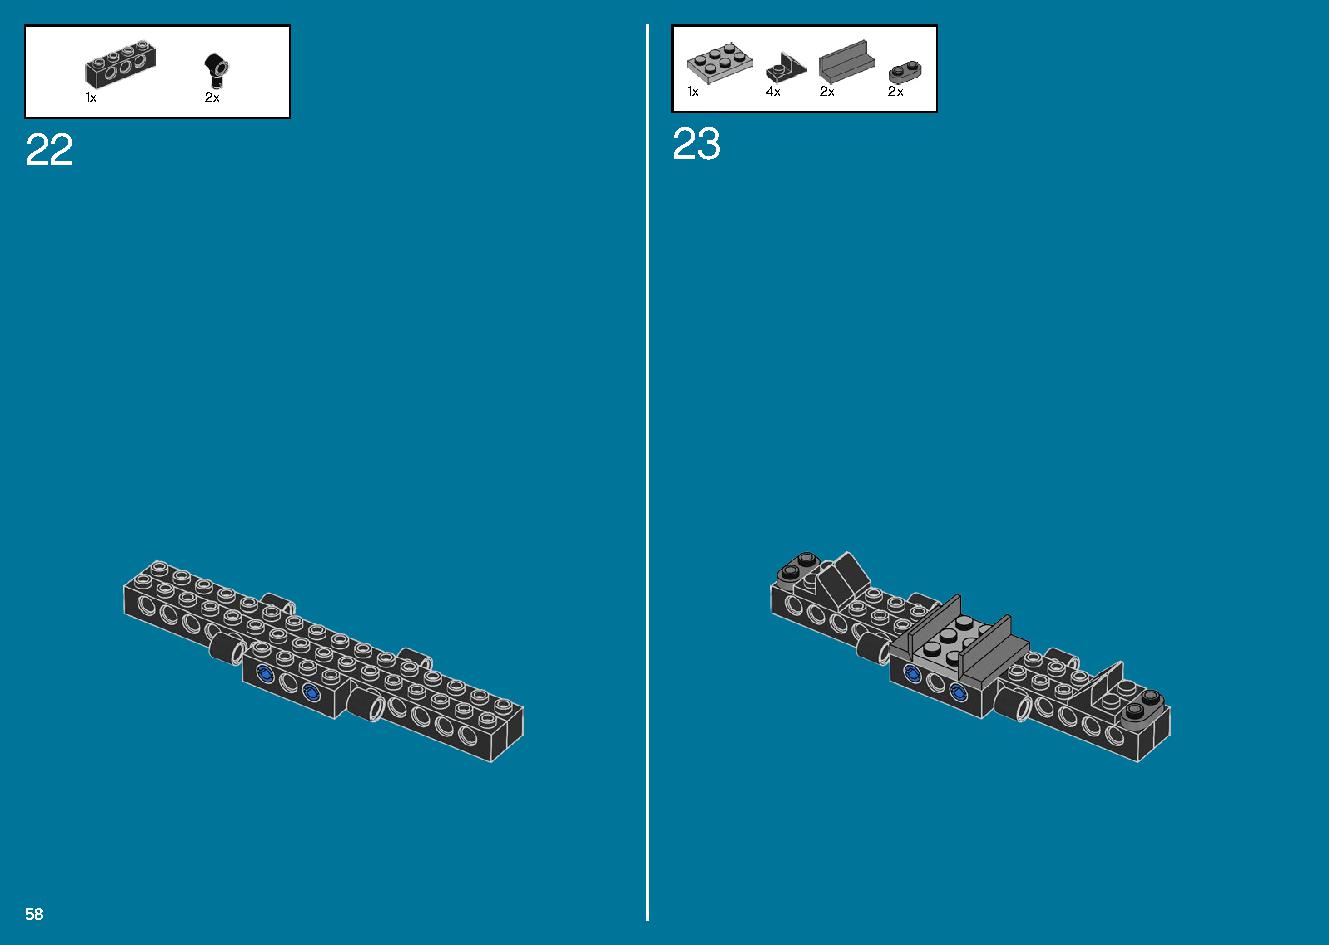 International Space Station 21321 レゴの商品情報 レゴの説明書・組立方法 58 page